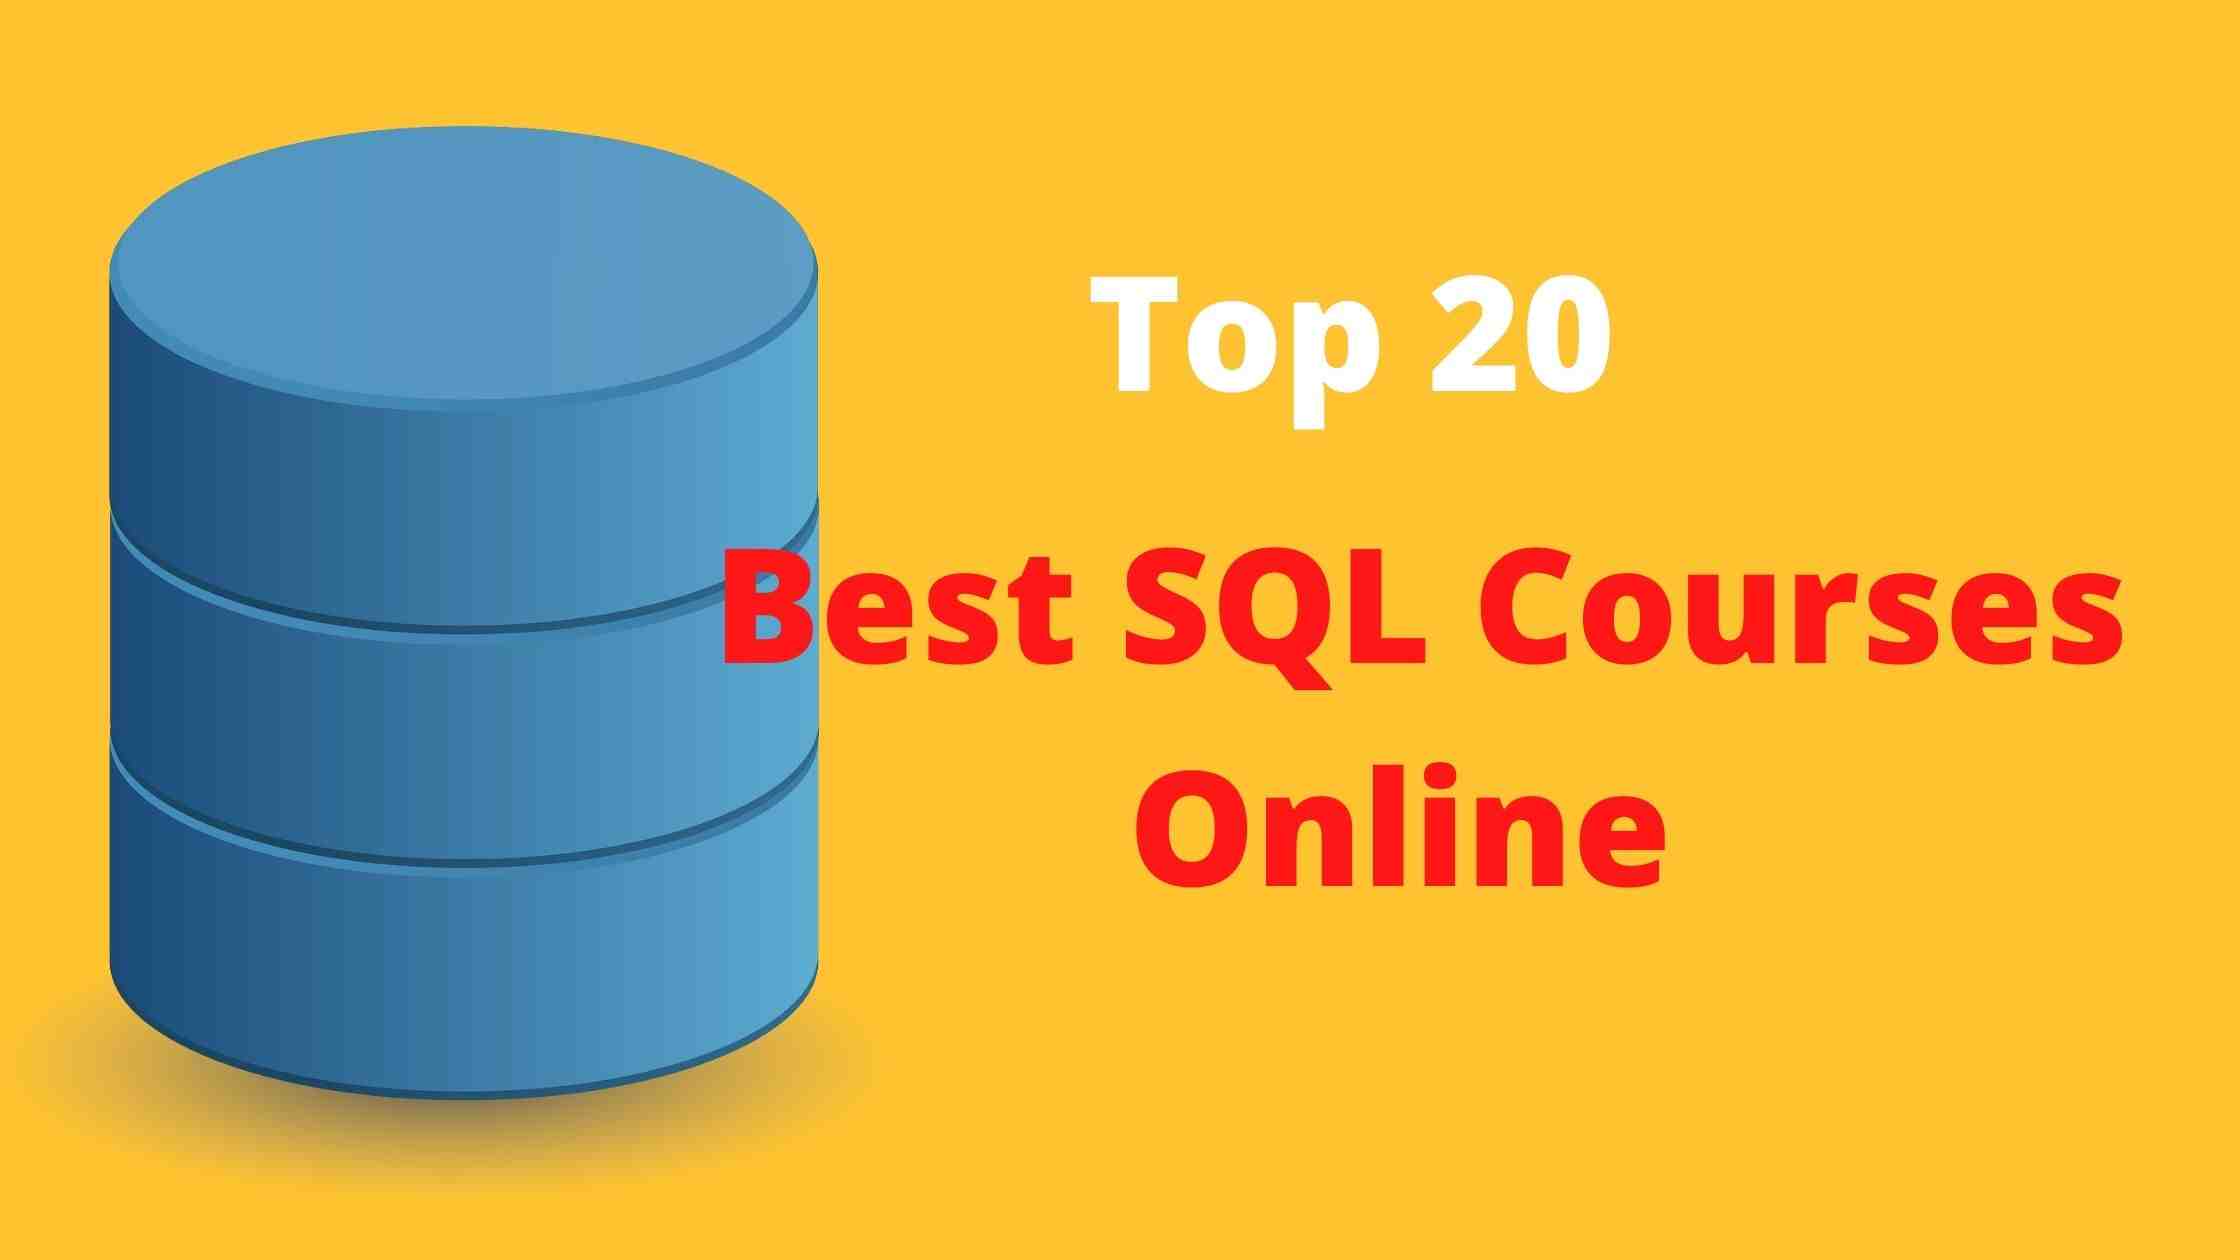 Top 20 Best SQL Courses online